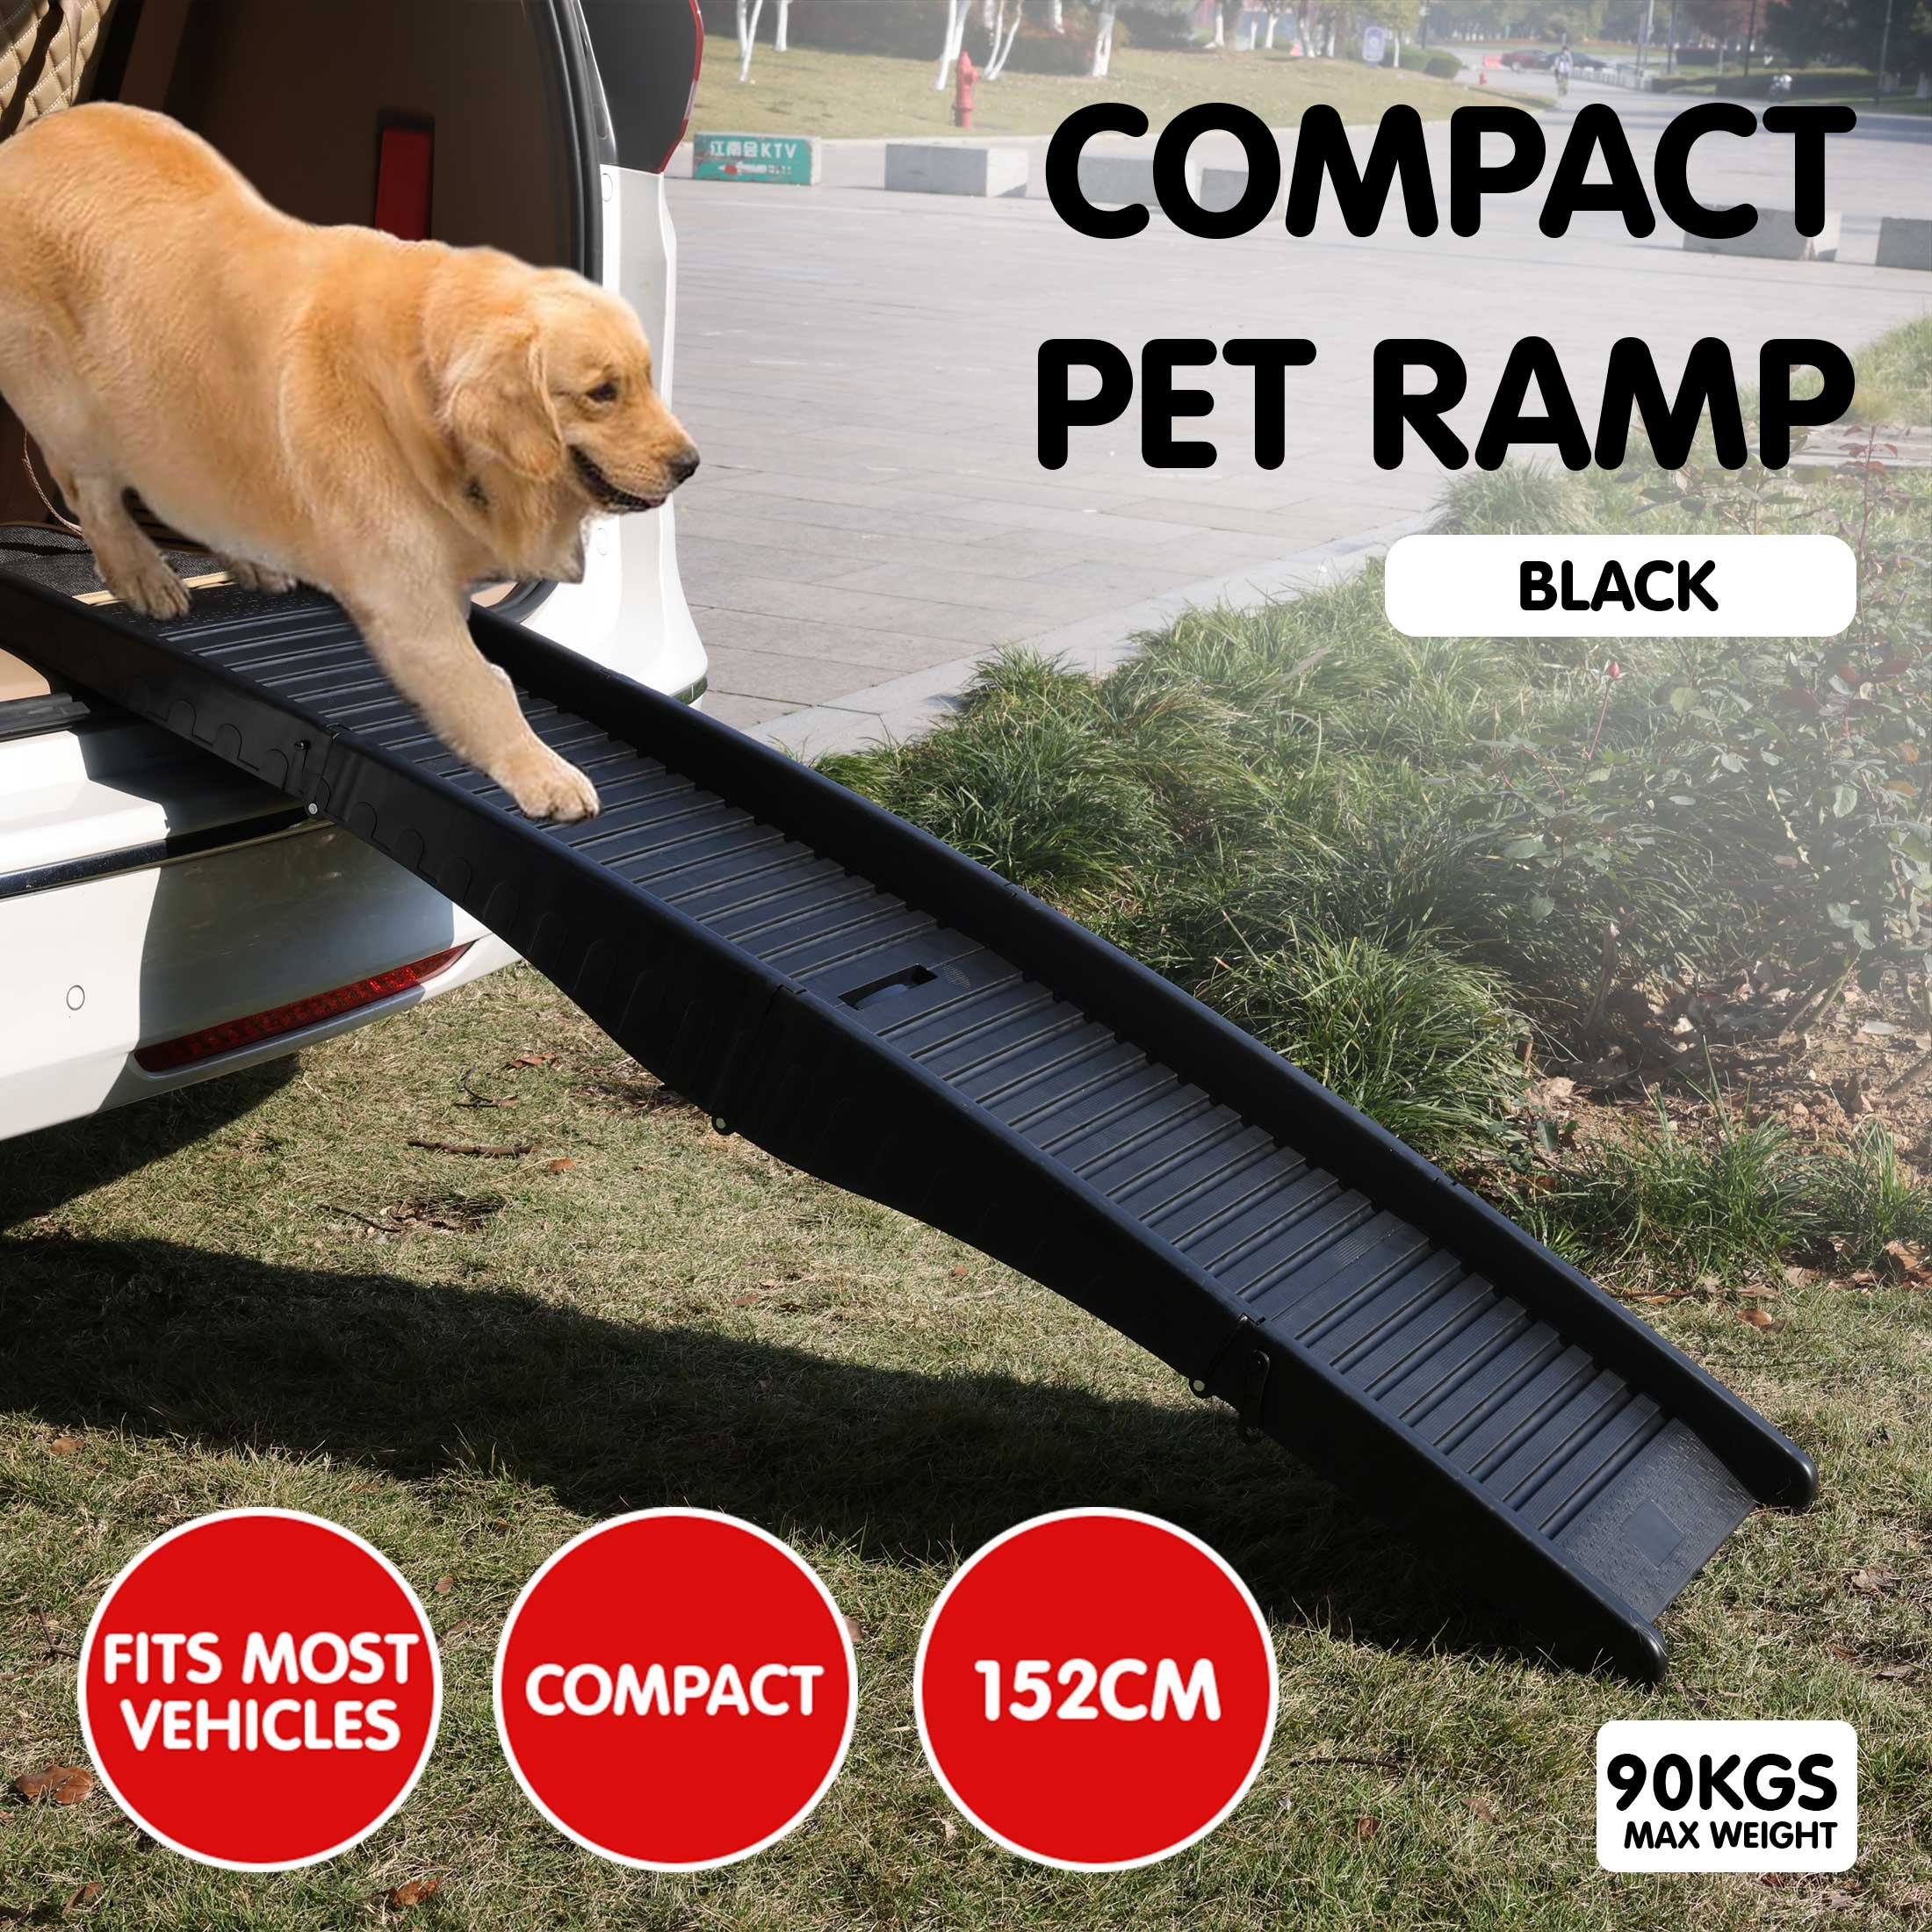 Furtastic 152cm Portable Dog Pet Ramp - Black 1